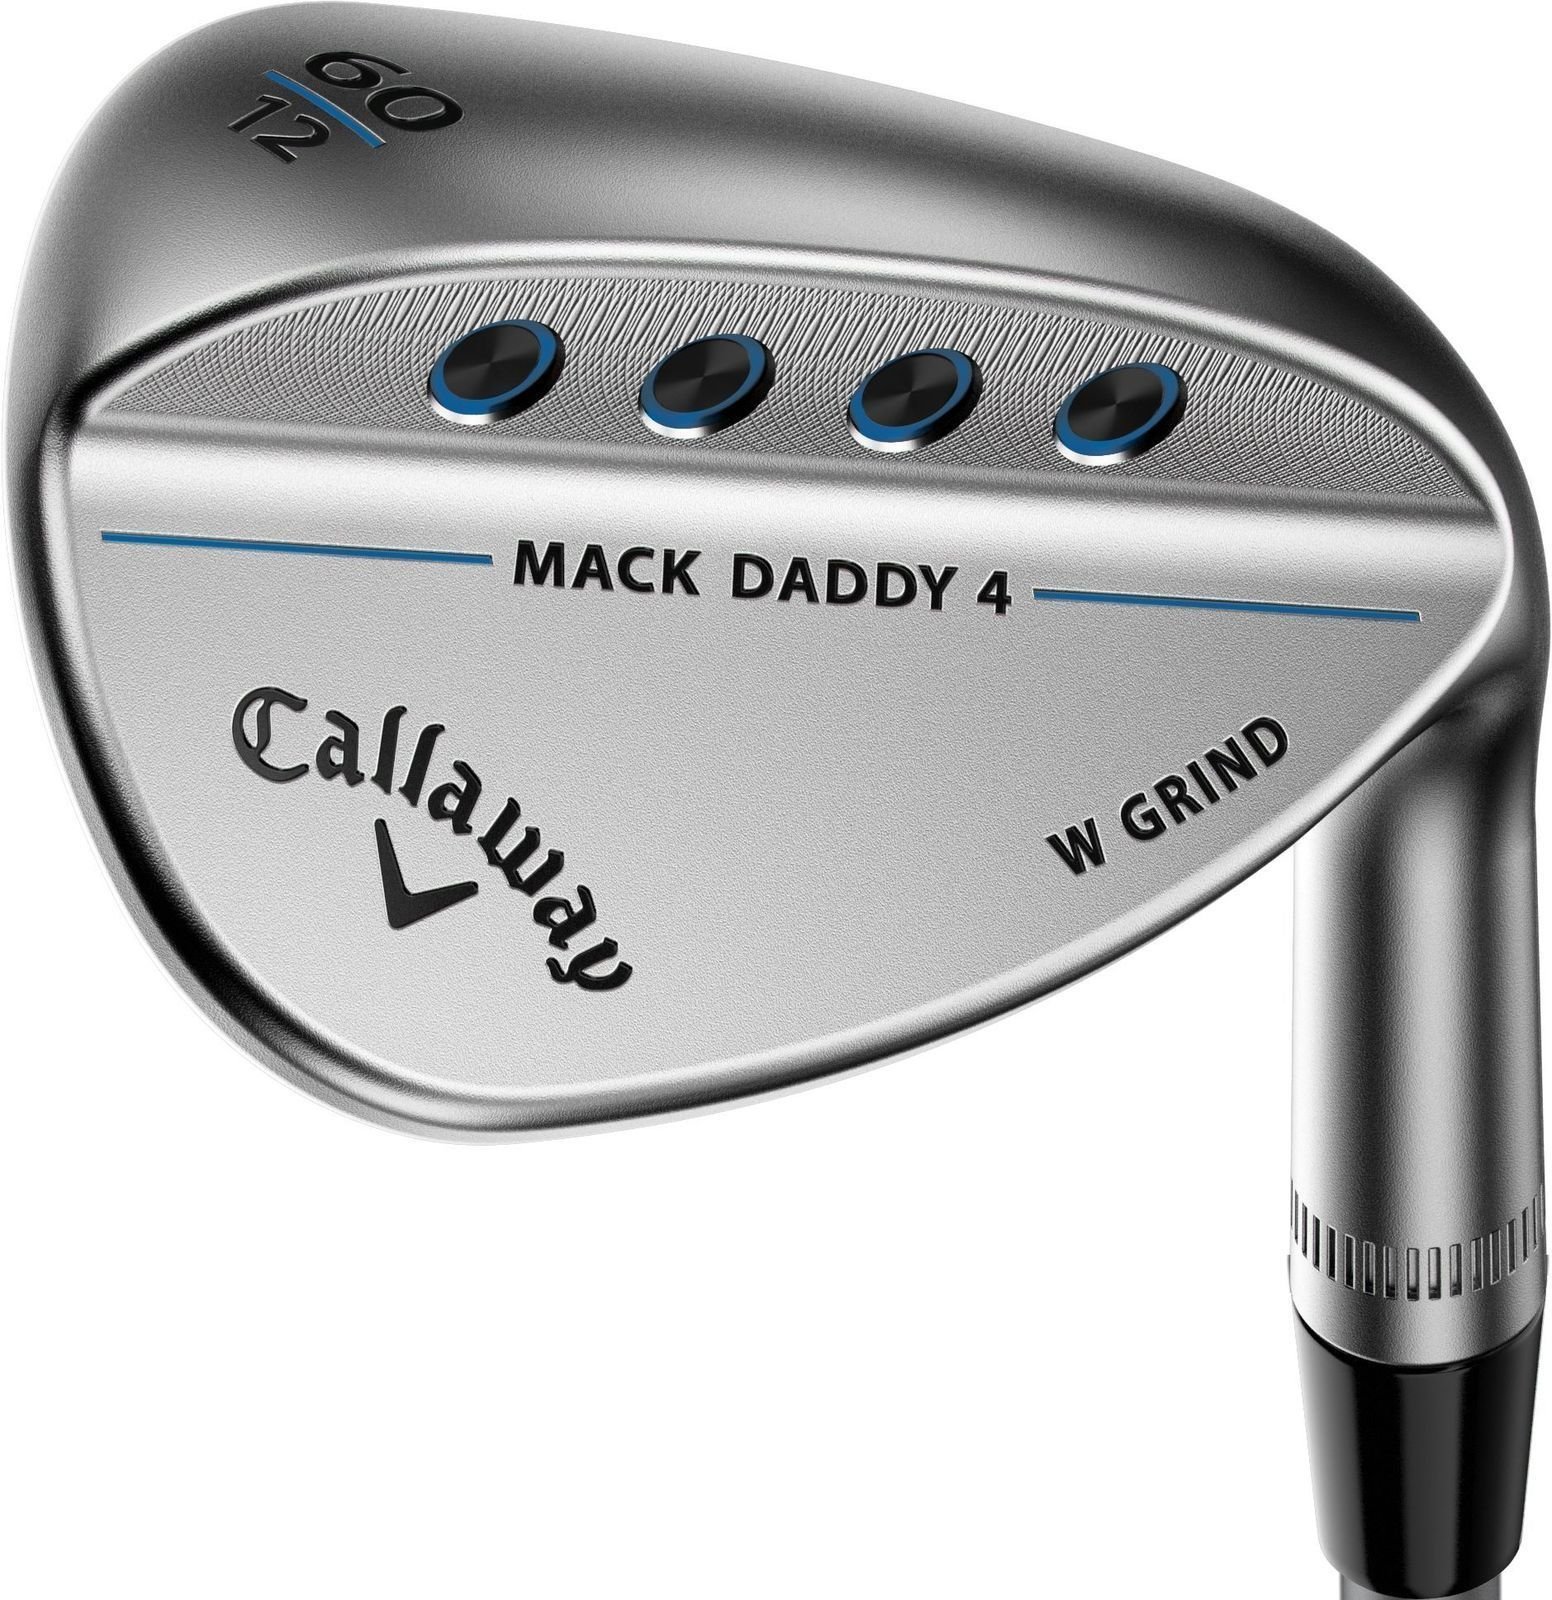 Mazza da golf - wedge Callaway Mack Daddy 4 Chrome Wedge 52-12 grafite donna destro